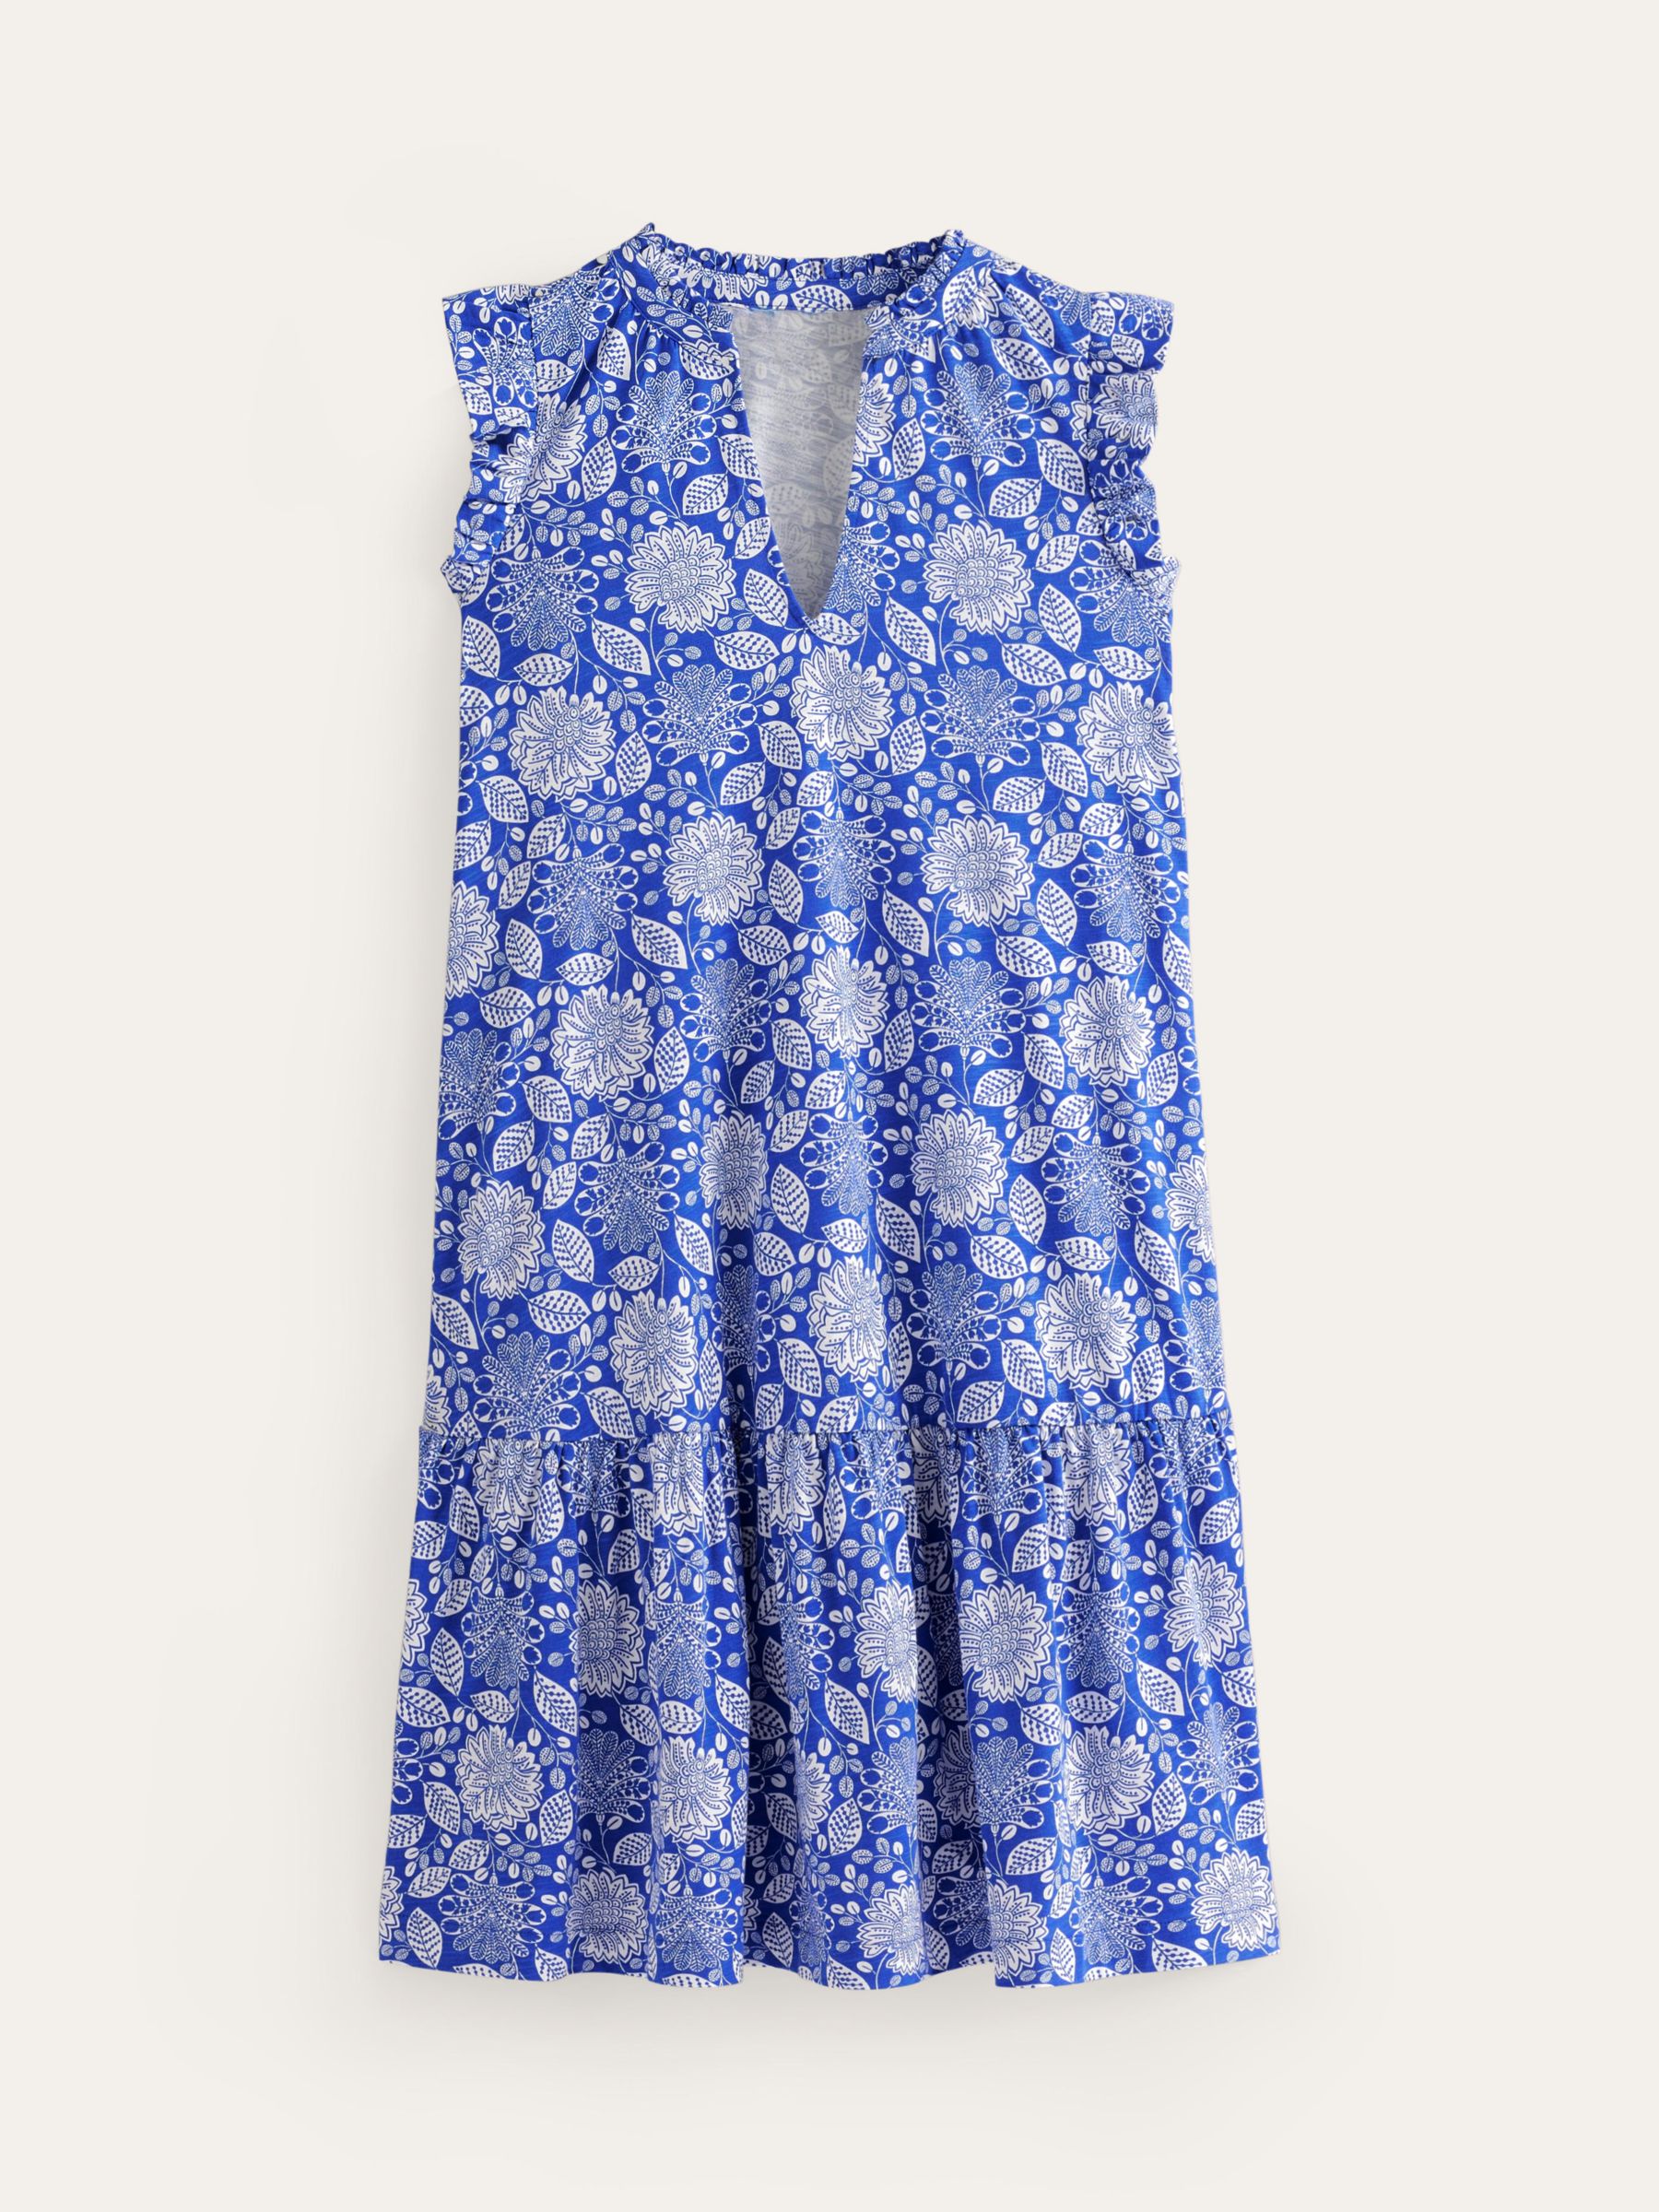 Boden Daisy Botanical Print Jersey Dress, Blue/White, 14